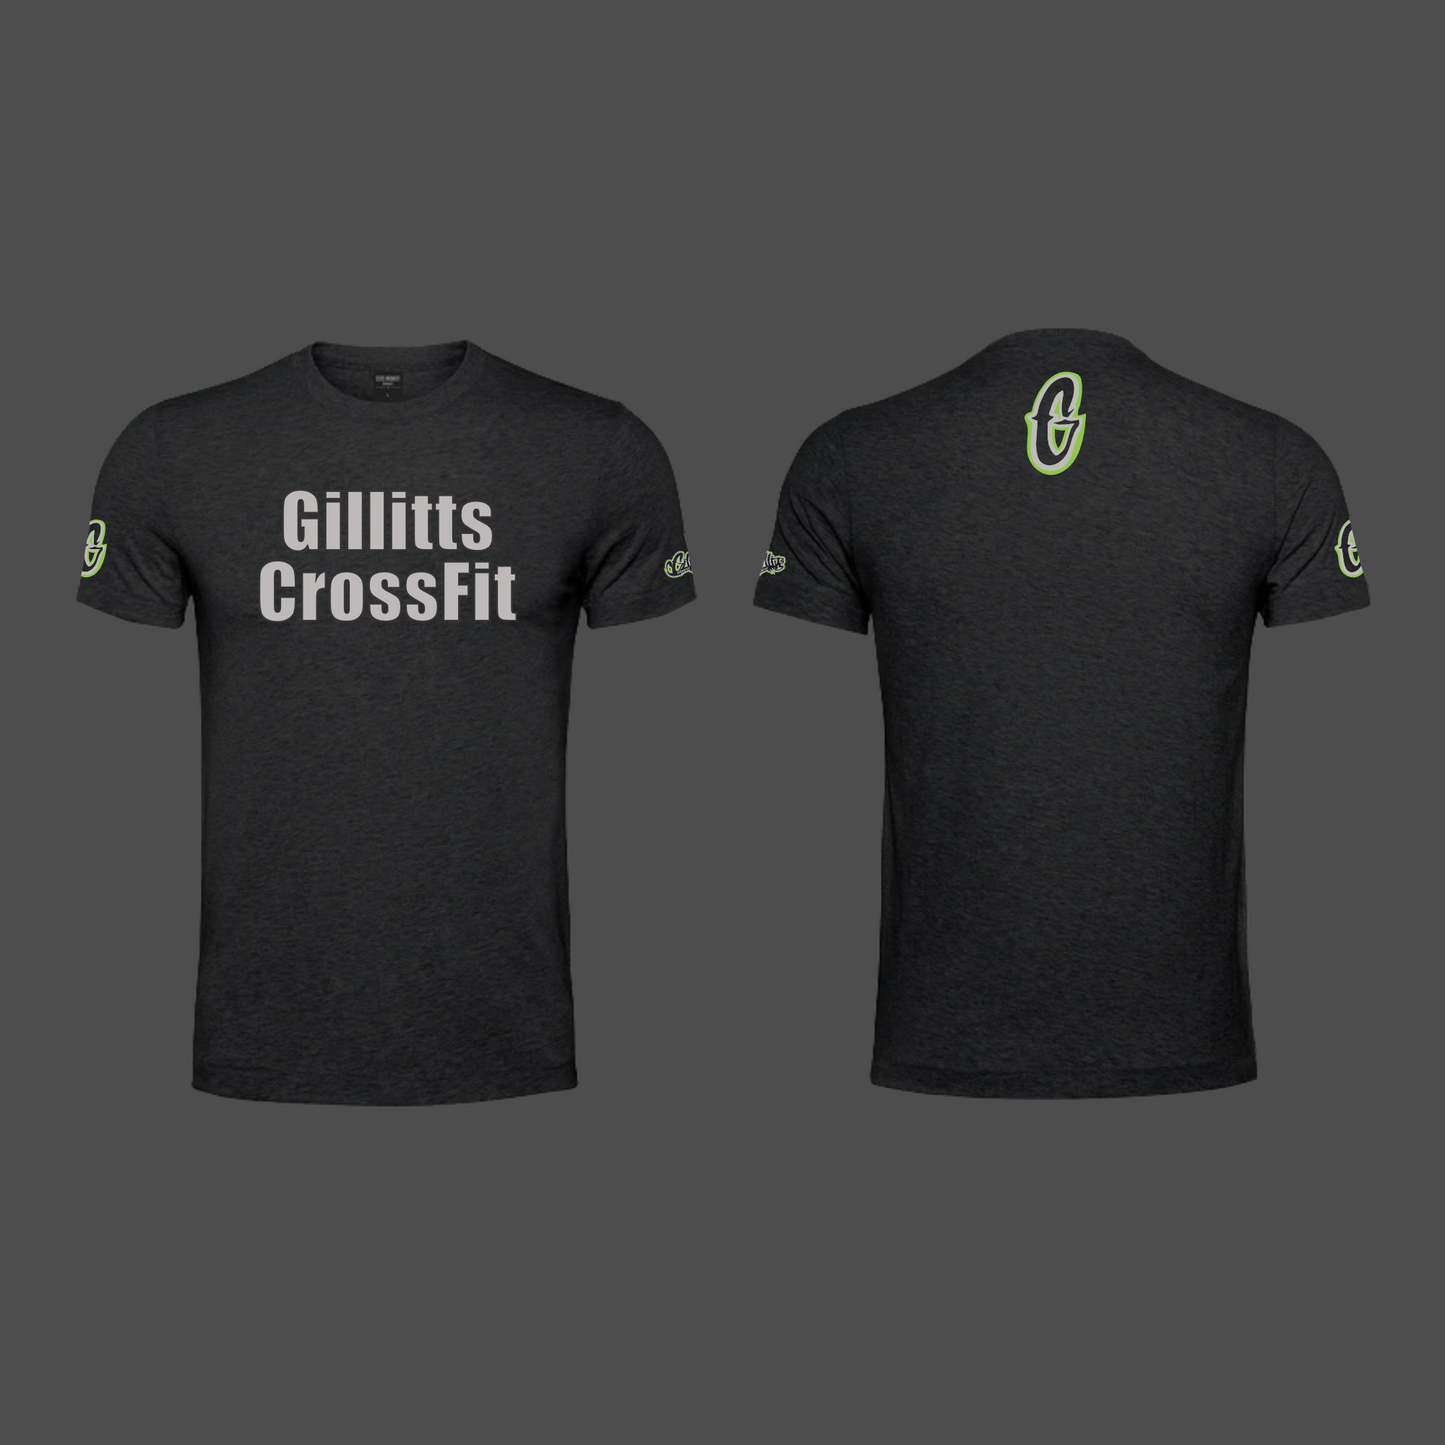 CF Gillitts - Crossfit Written - Tshirts